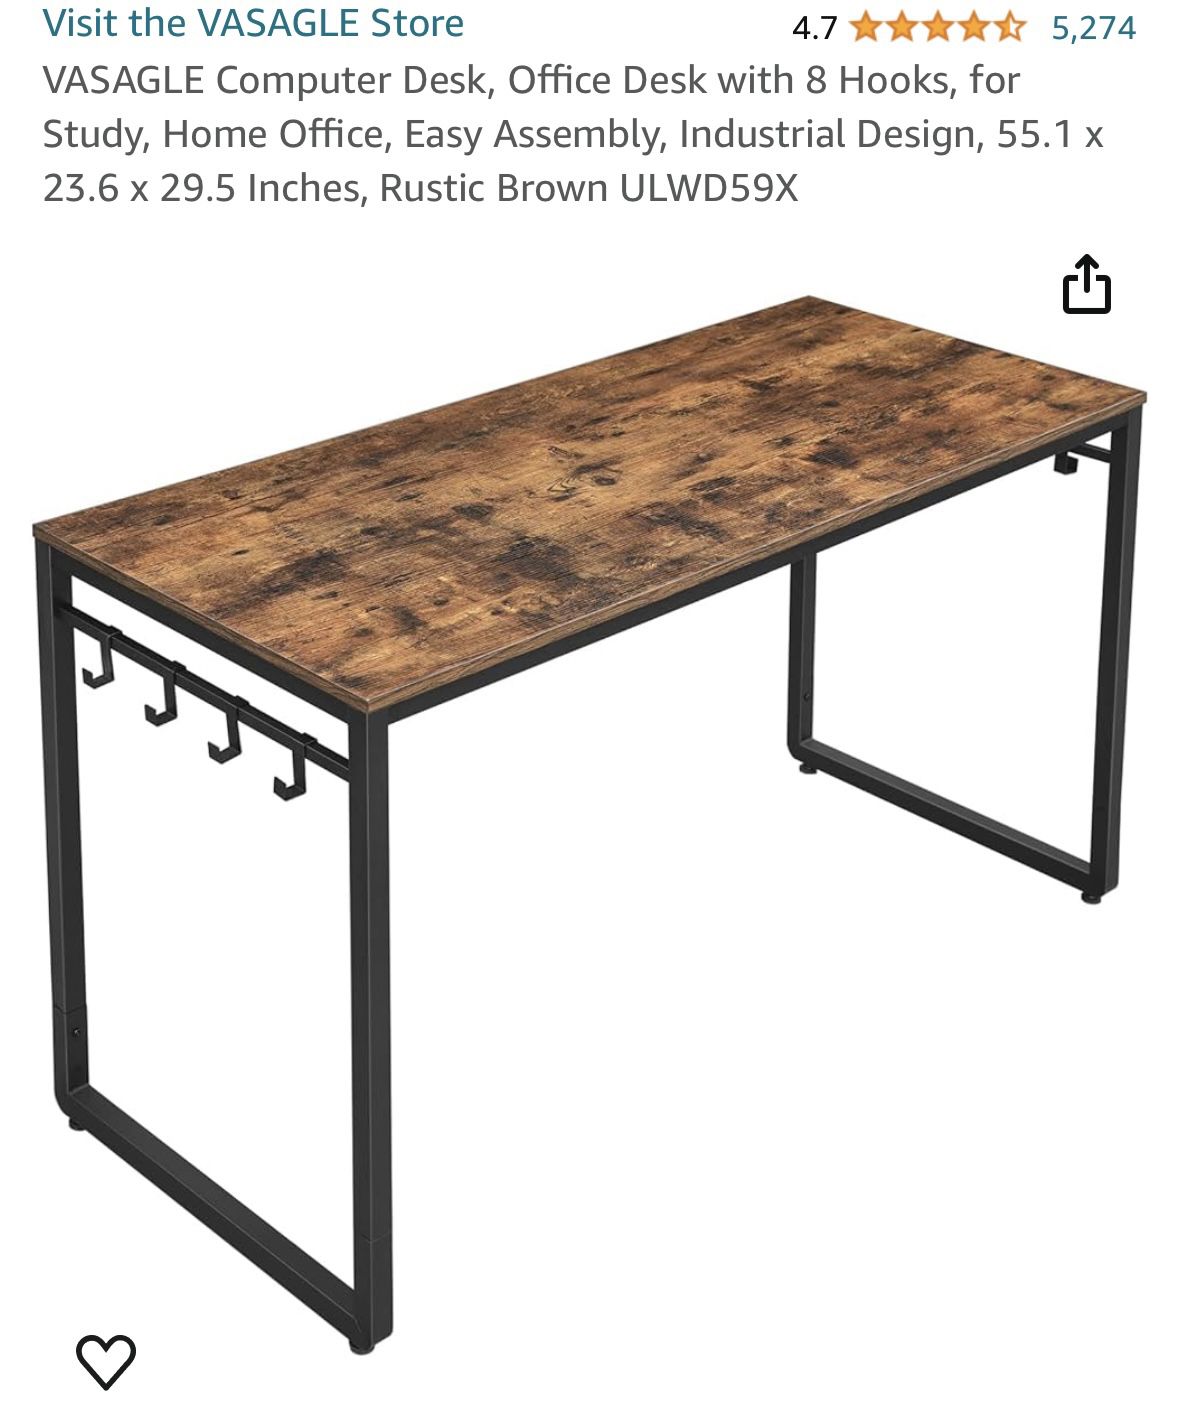 Barely Used Desk—Amazon’s #1 Choice